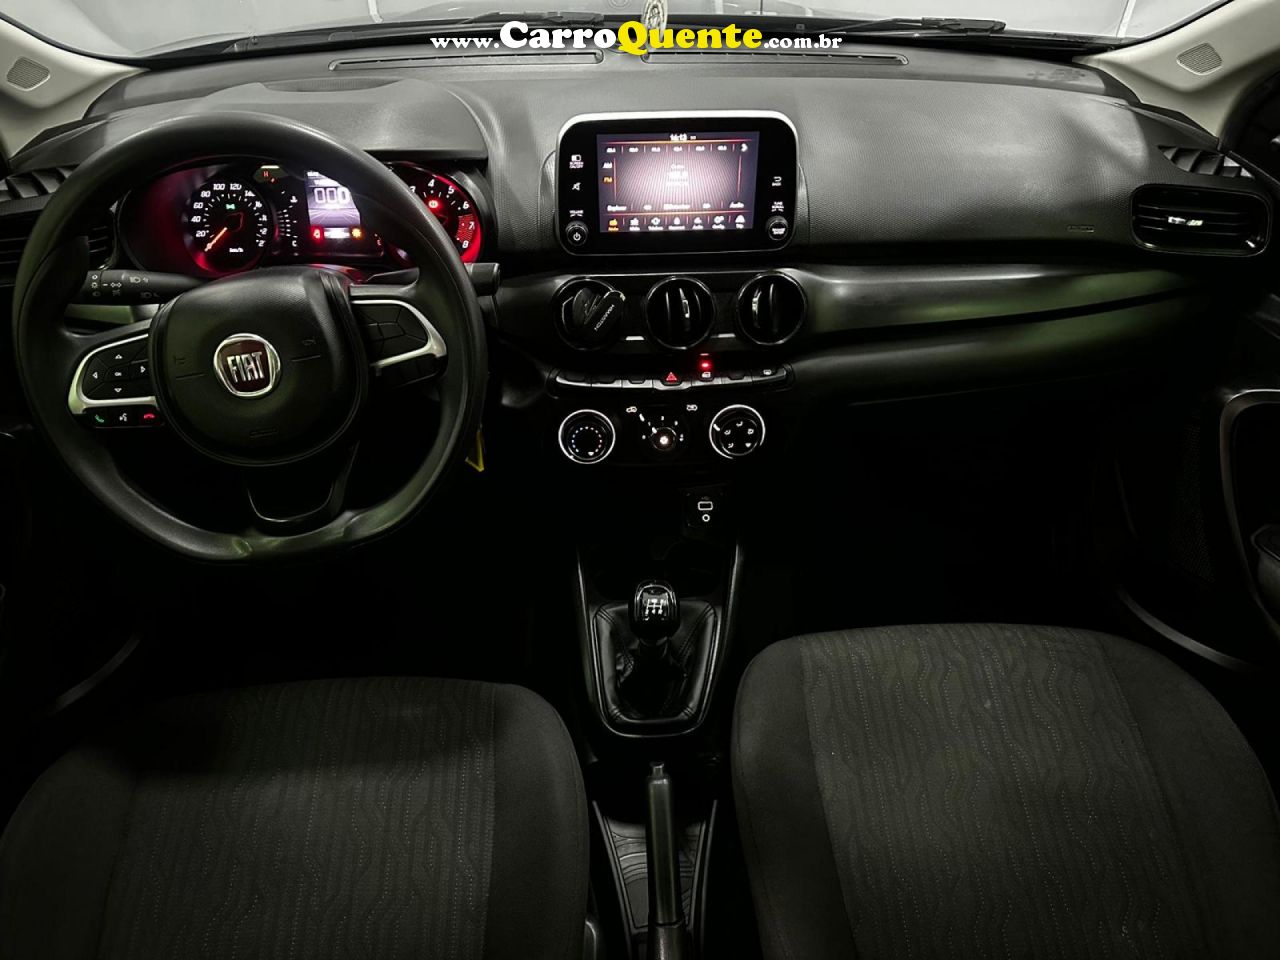 FIAT   CRONOS DRIVE 1.3 8V FLEX   CINZA 2020 1.3 FLEX - Loja